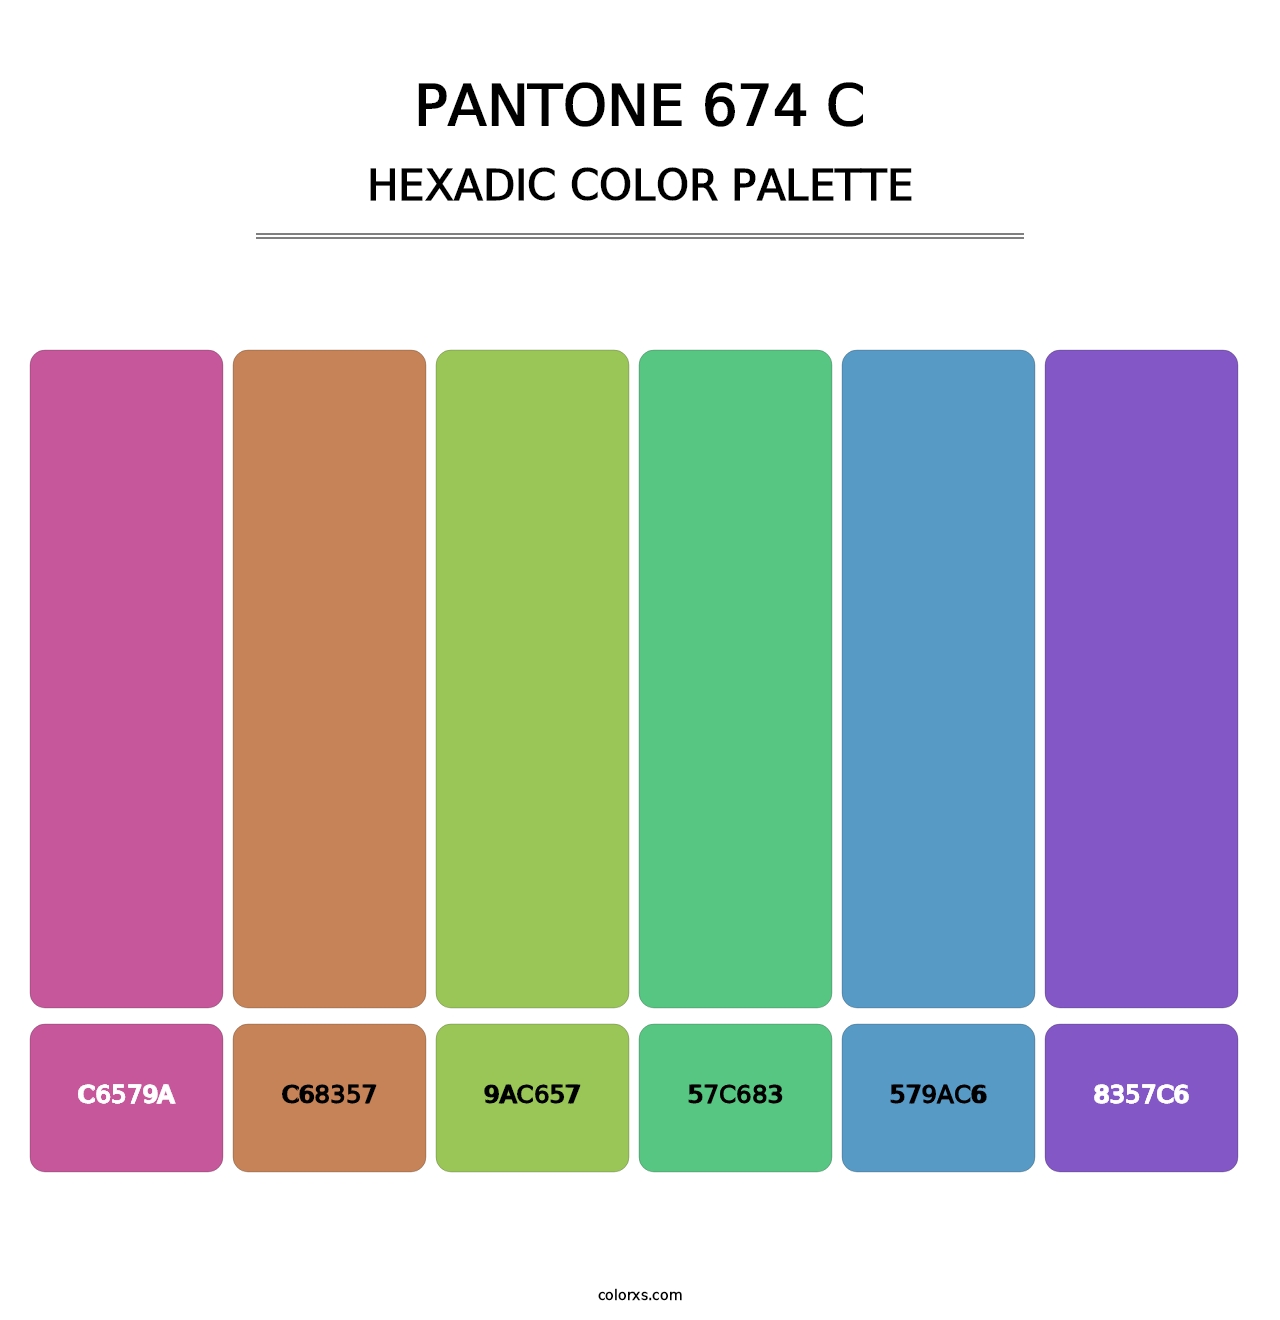 PANTONE 674 C - Hexadic Color Palette